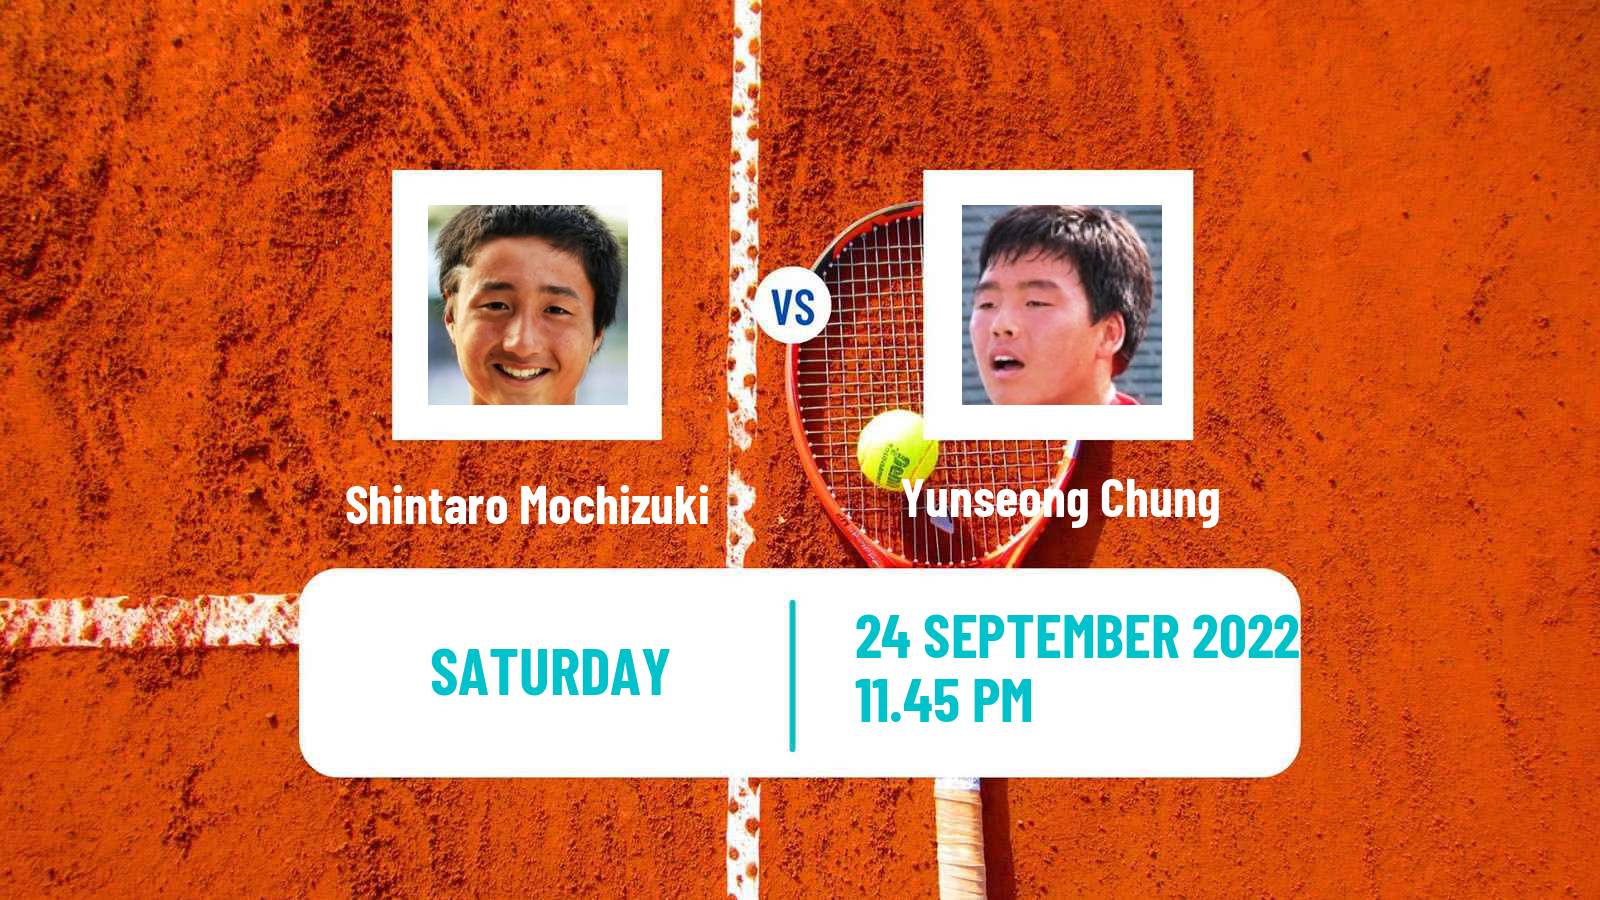 Tennis ATP Seoul Shintaro Mochizuki - Yunseong Chung